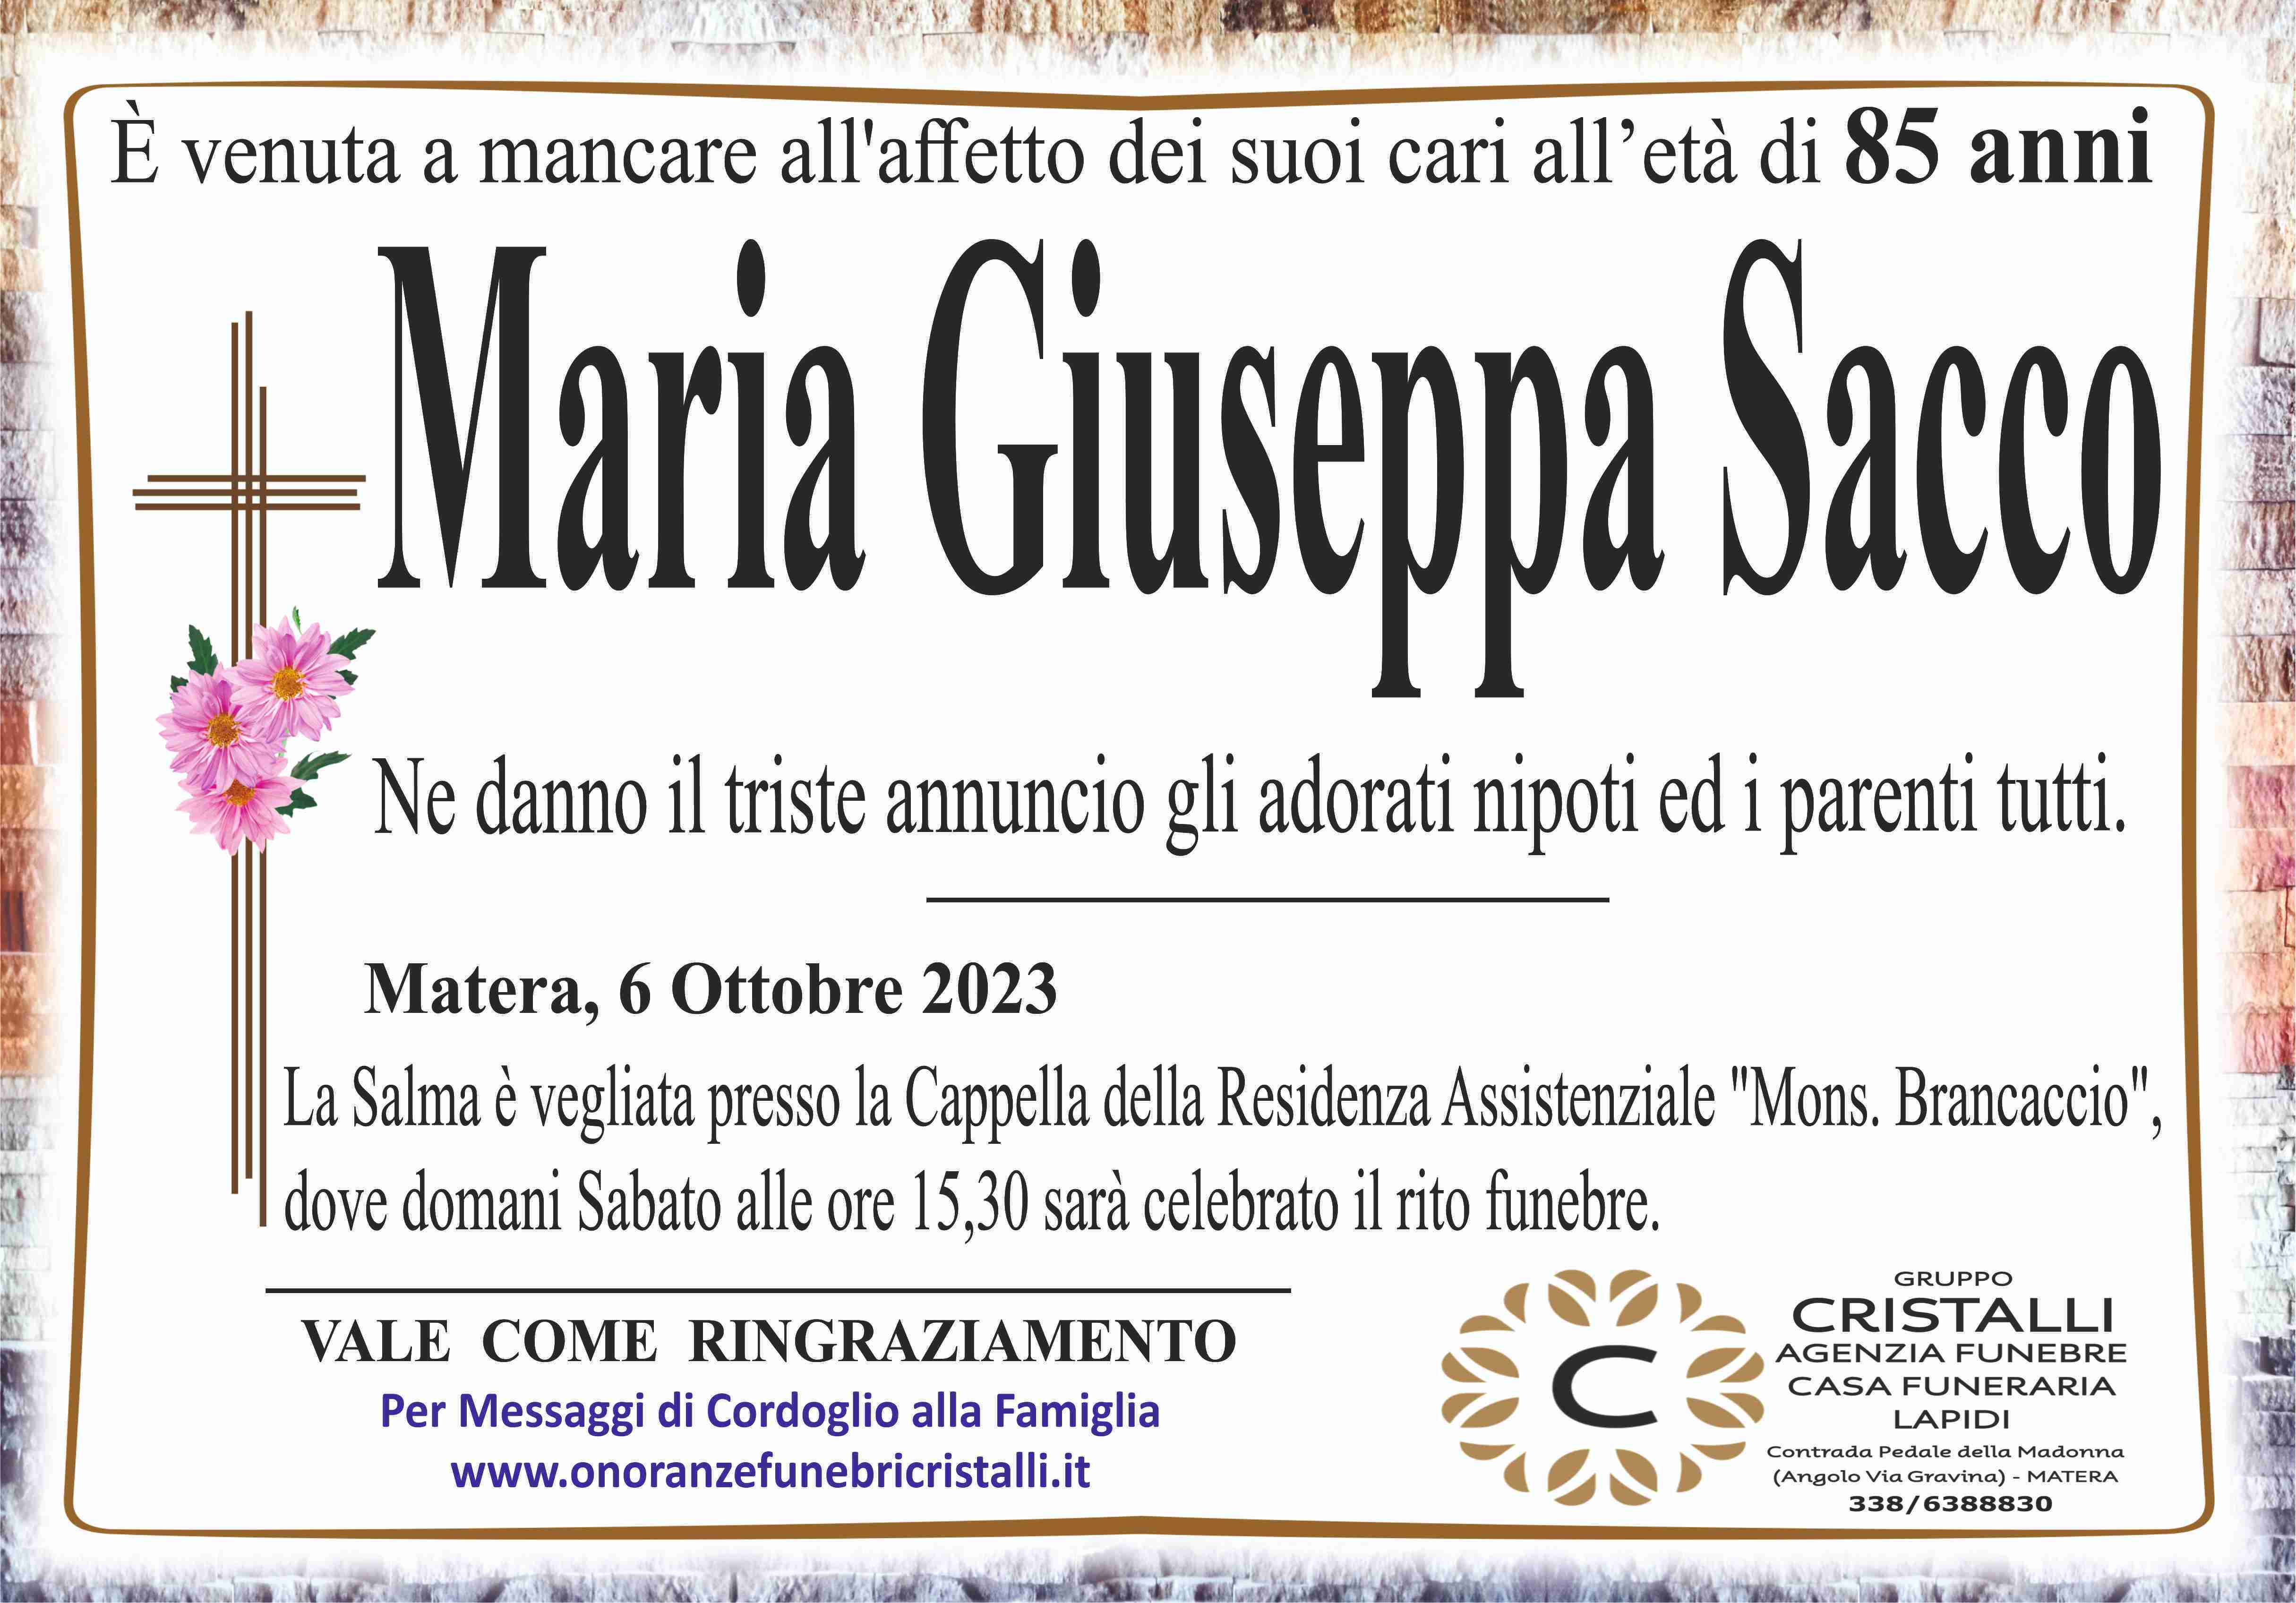 Maria Giuseppa Sacco